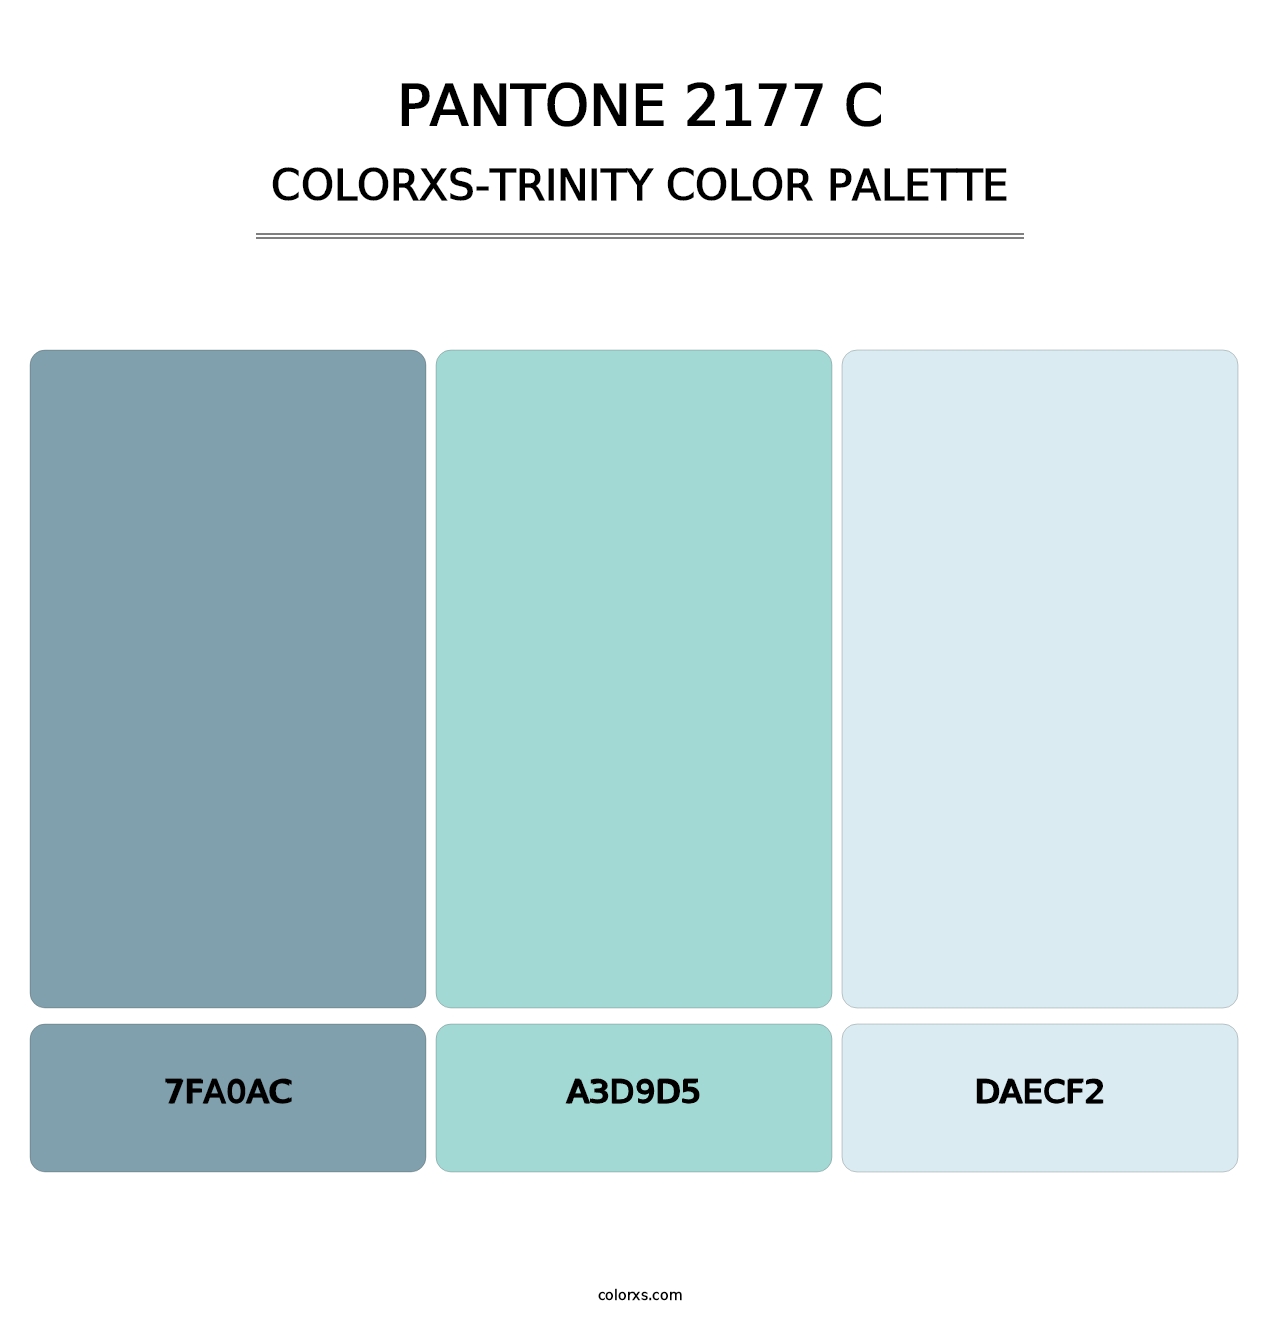 PANTONE 2177 C - Colorxs Trinity Palette